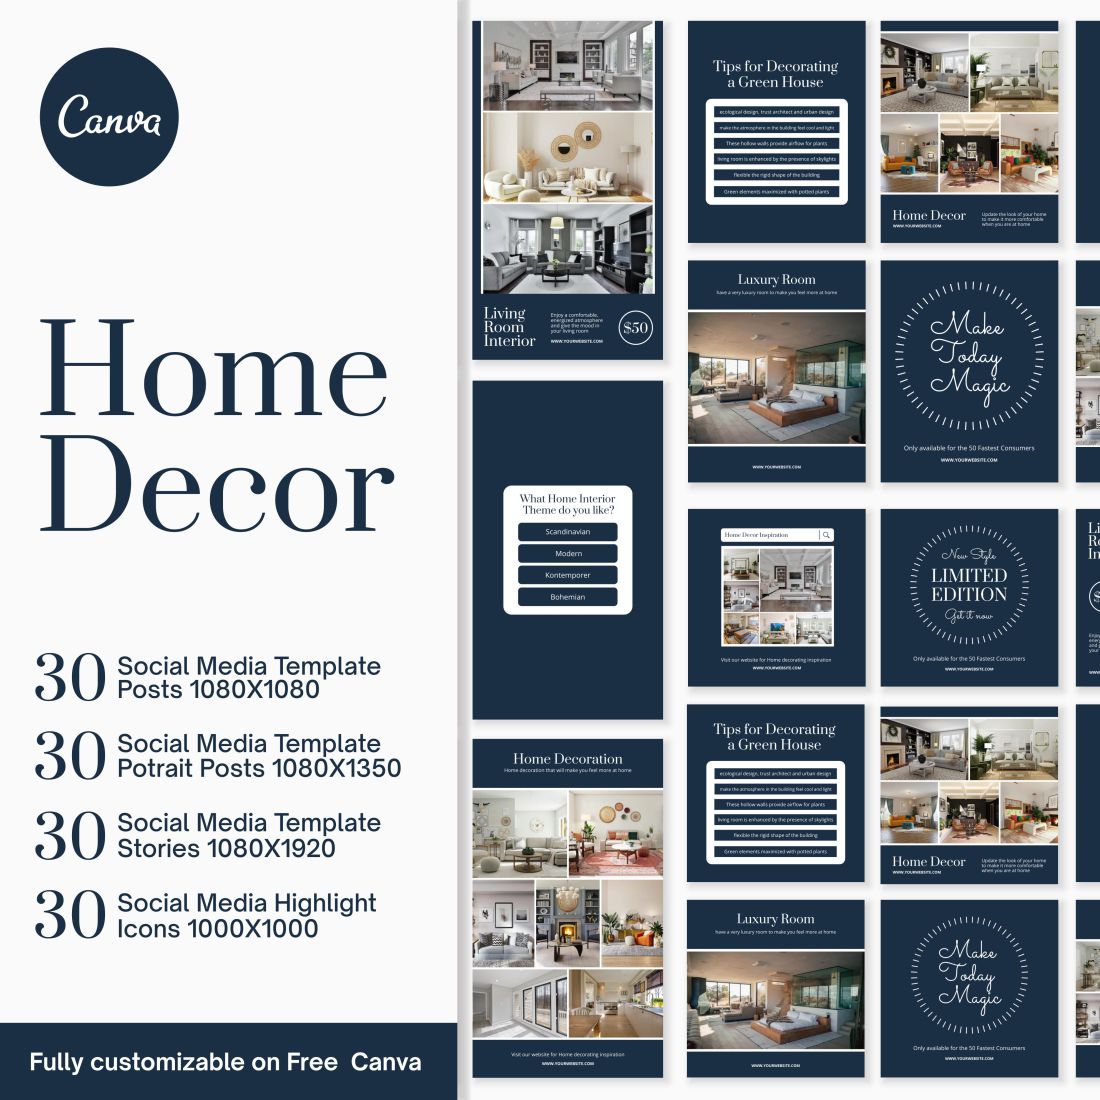 Home Decor For Real Estate Social Media Instagram Templates Cover Image.